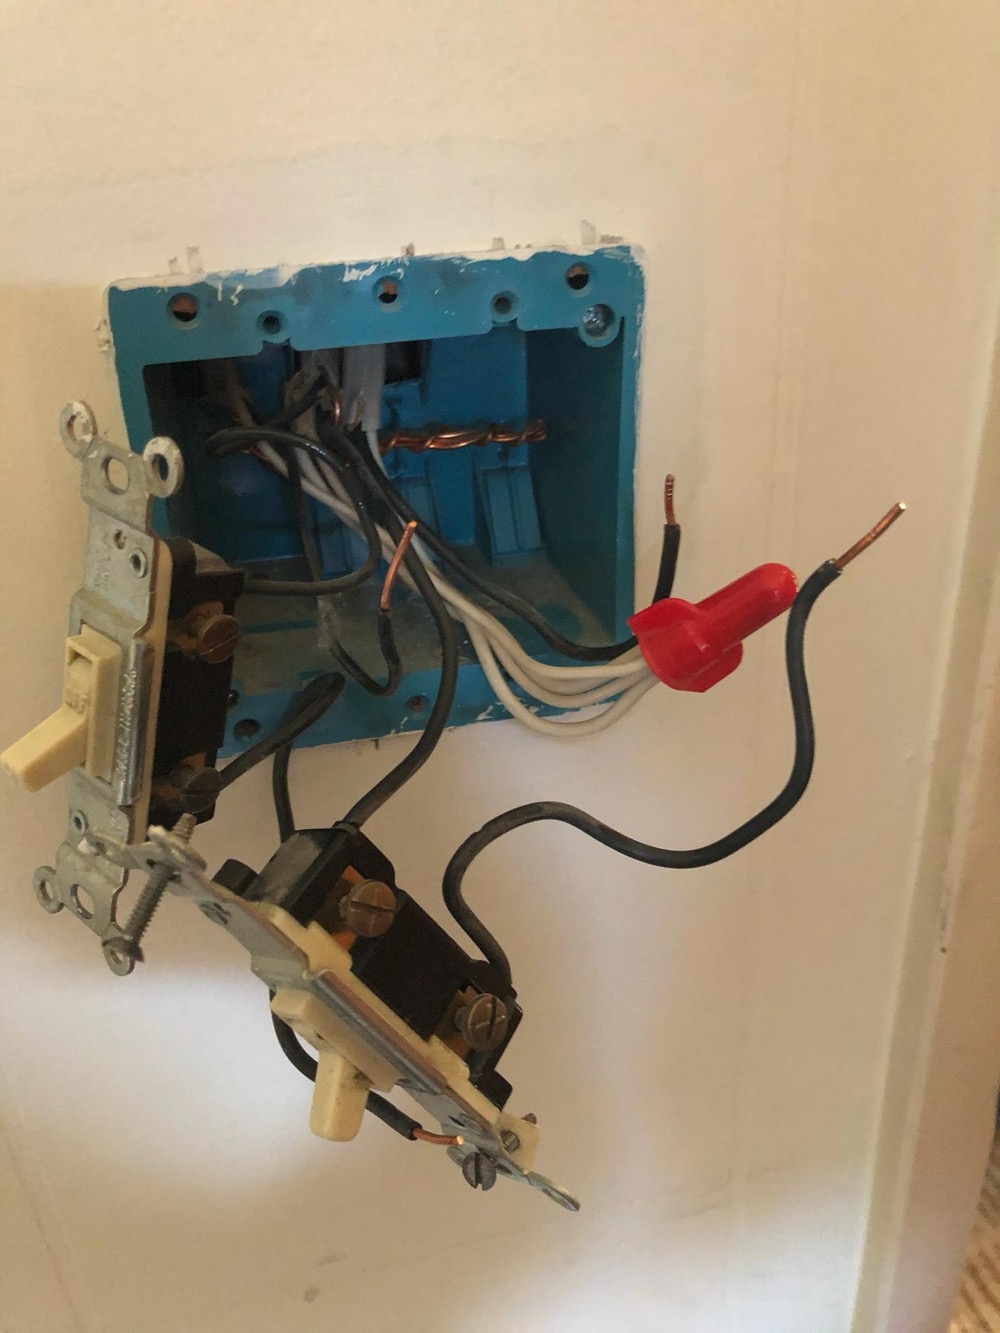 My light switch wiring